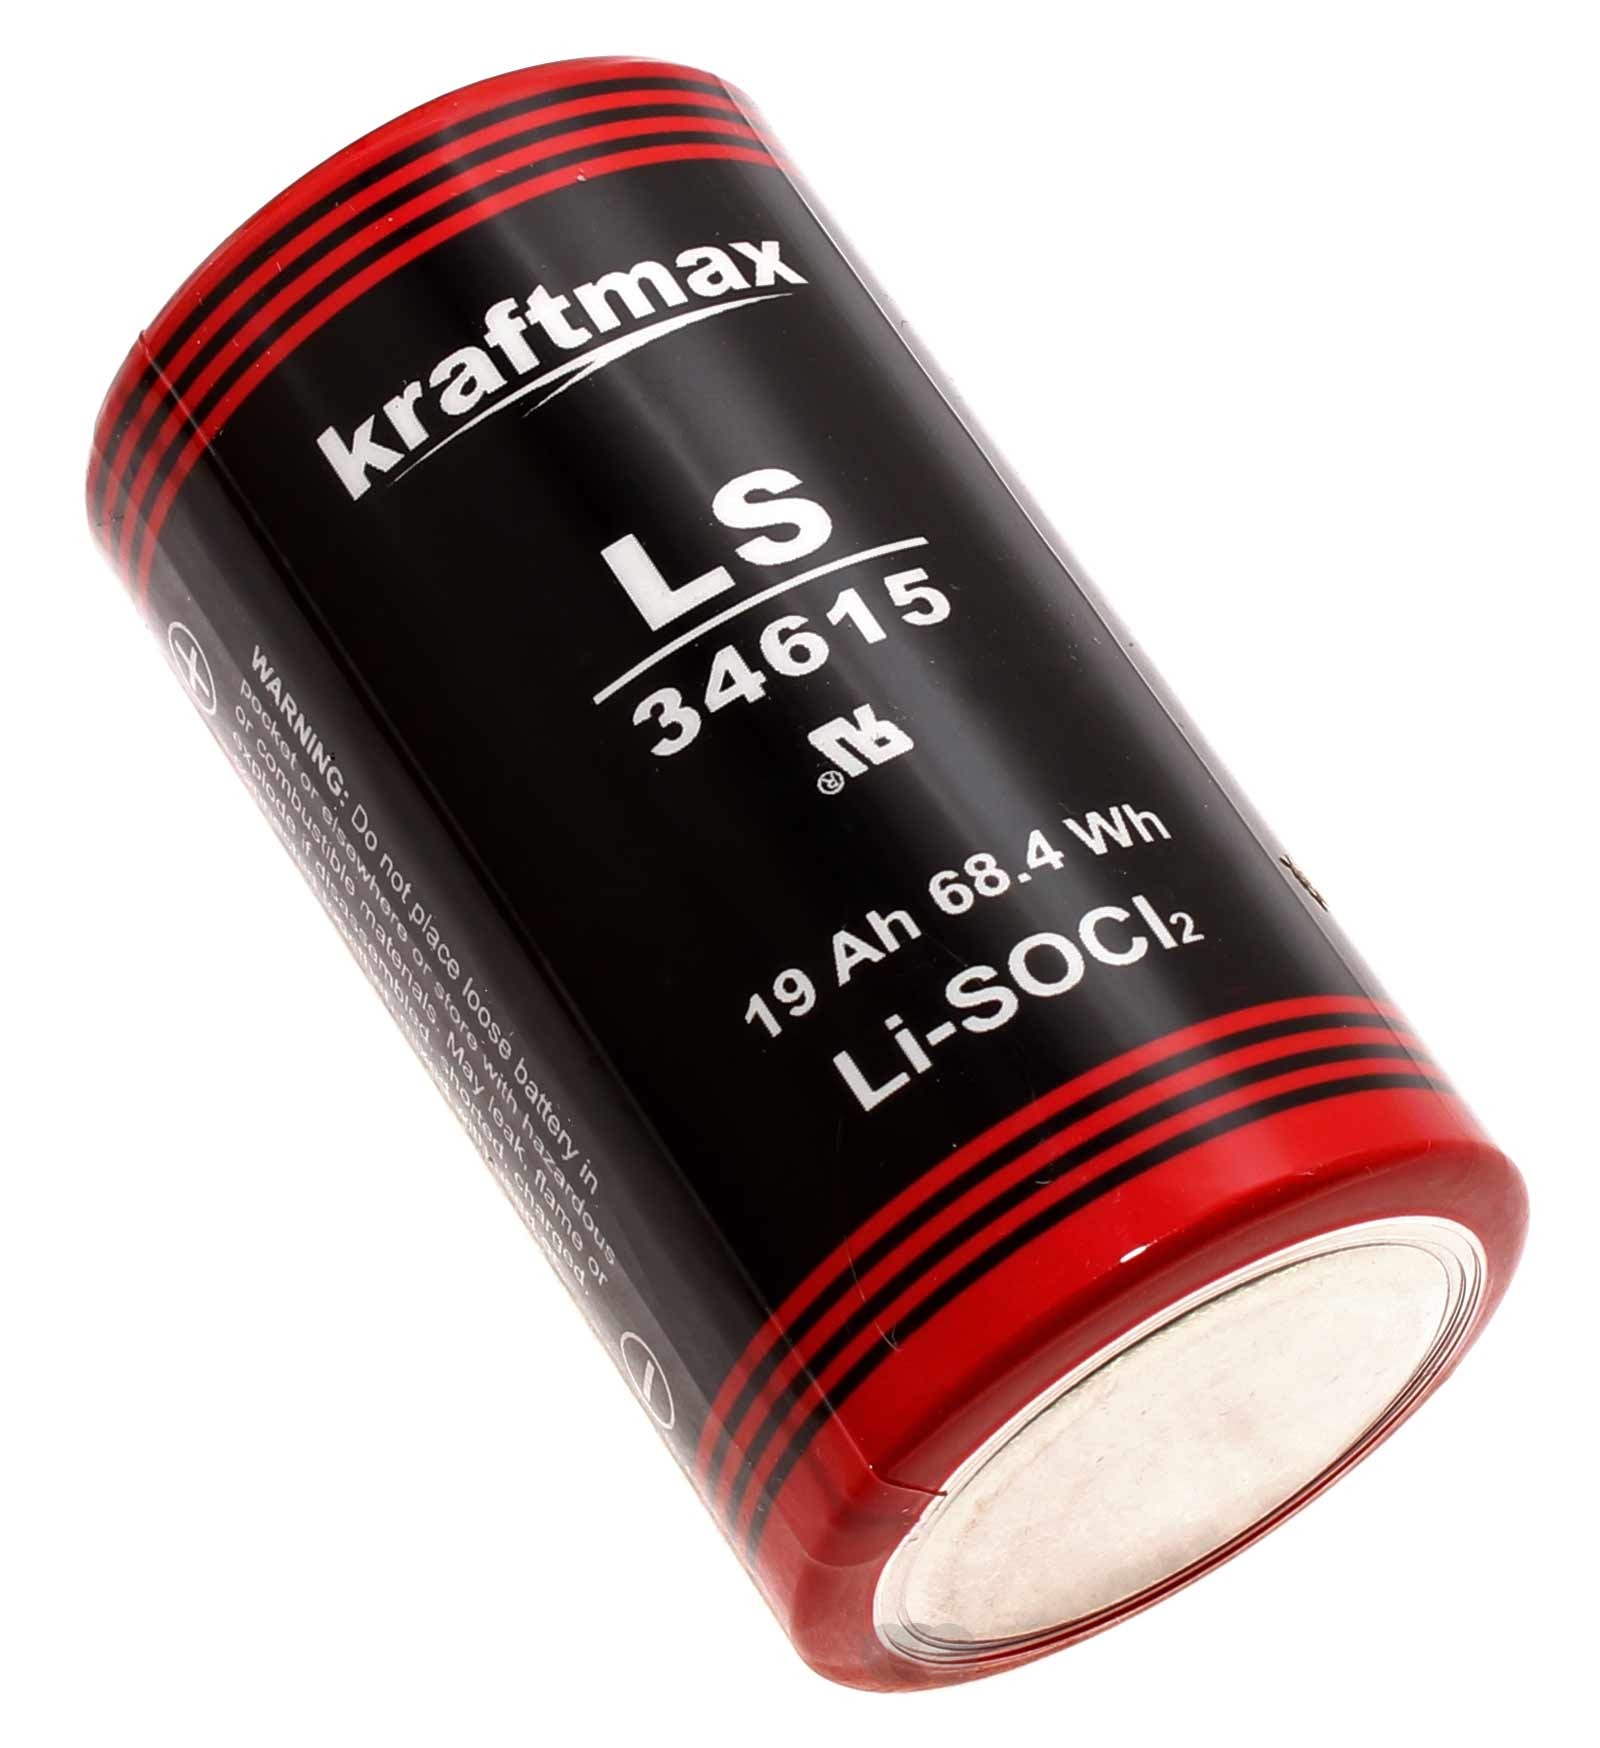 Kraftmax LS 34615 Lithium Batterie D Mono mit 3,6 Volt und 19000mAh Kapazität, Spezial-Batterie